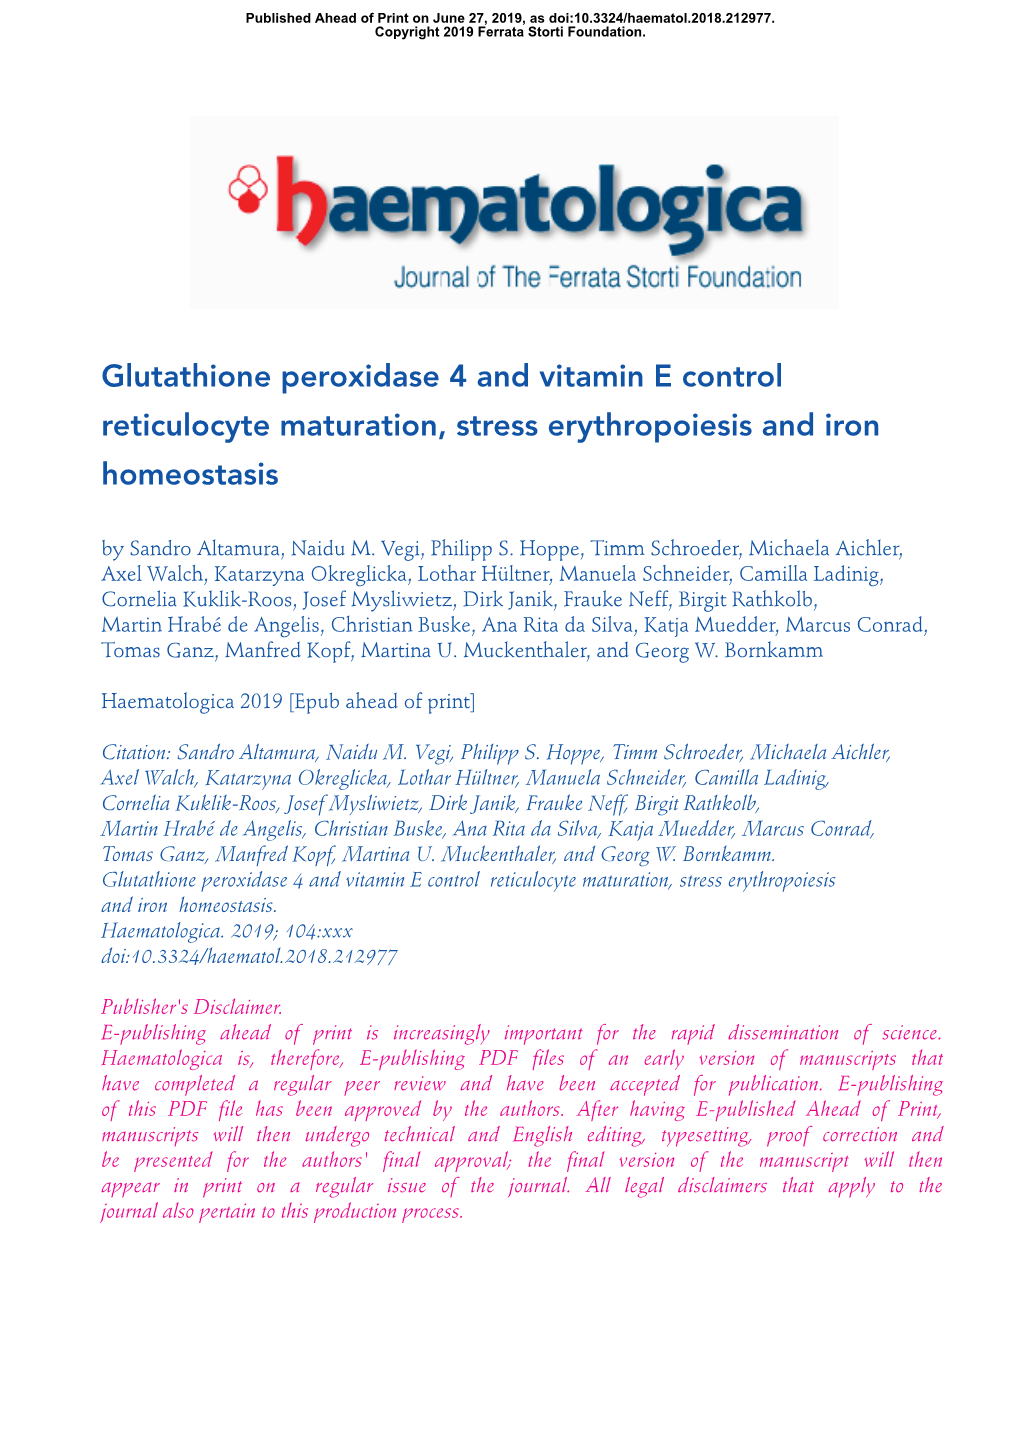 Glutathione Peroxidase 4 and Vitamin E Control Reticulocyte Maturation, Stress Erythropoiesis and Iron Homeostasis by Sandro Altamura, Naidu M